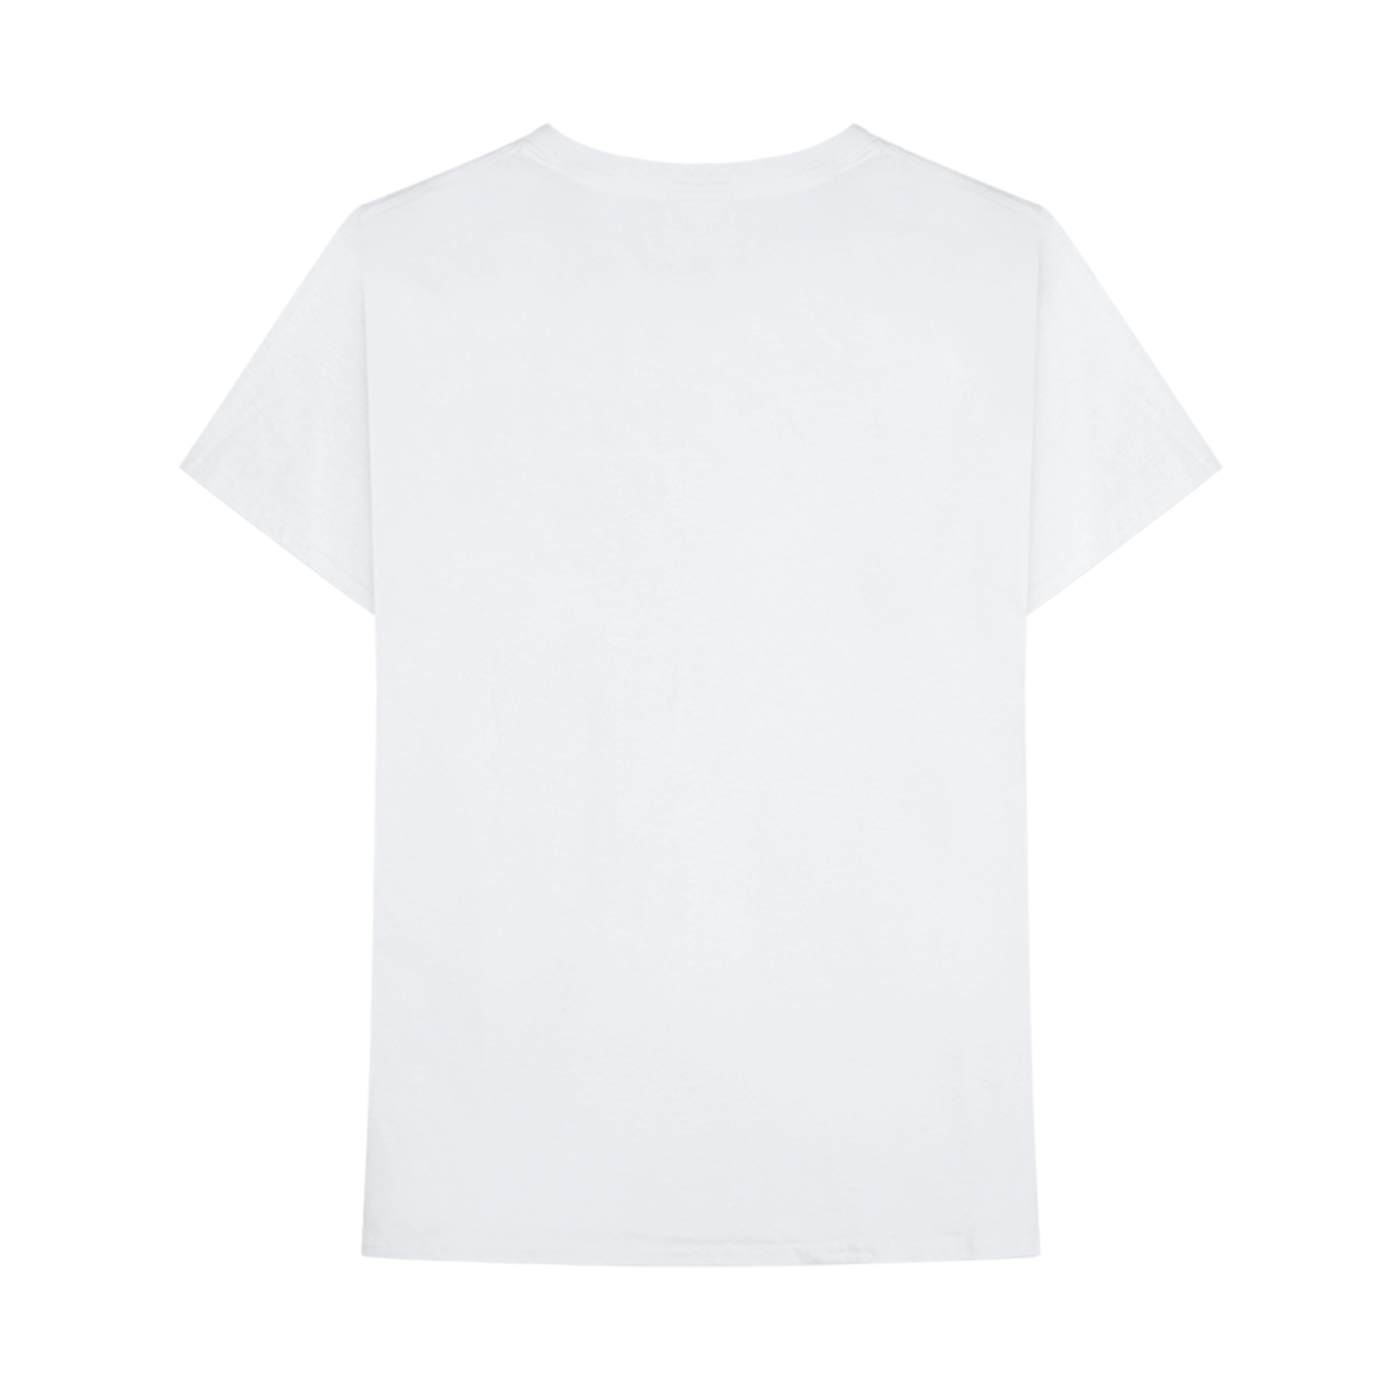 USHER Atlanta™ T-Shirt + Digital